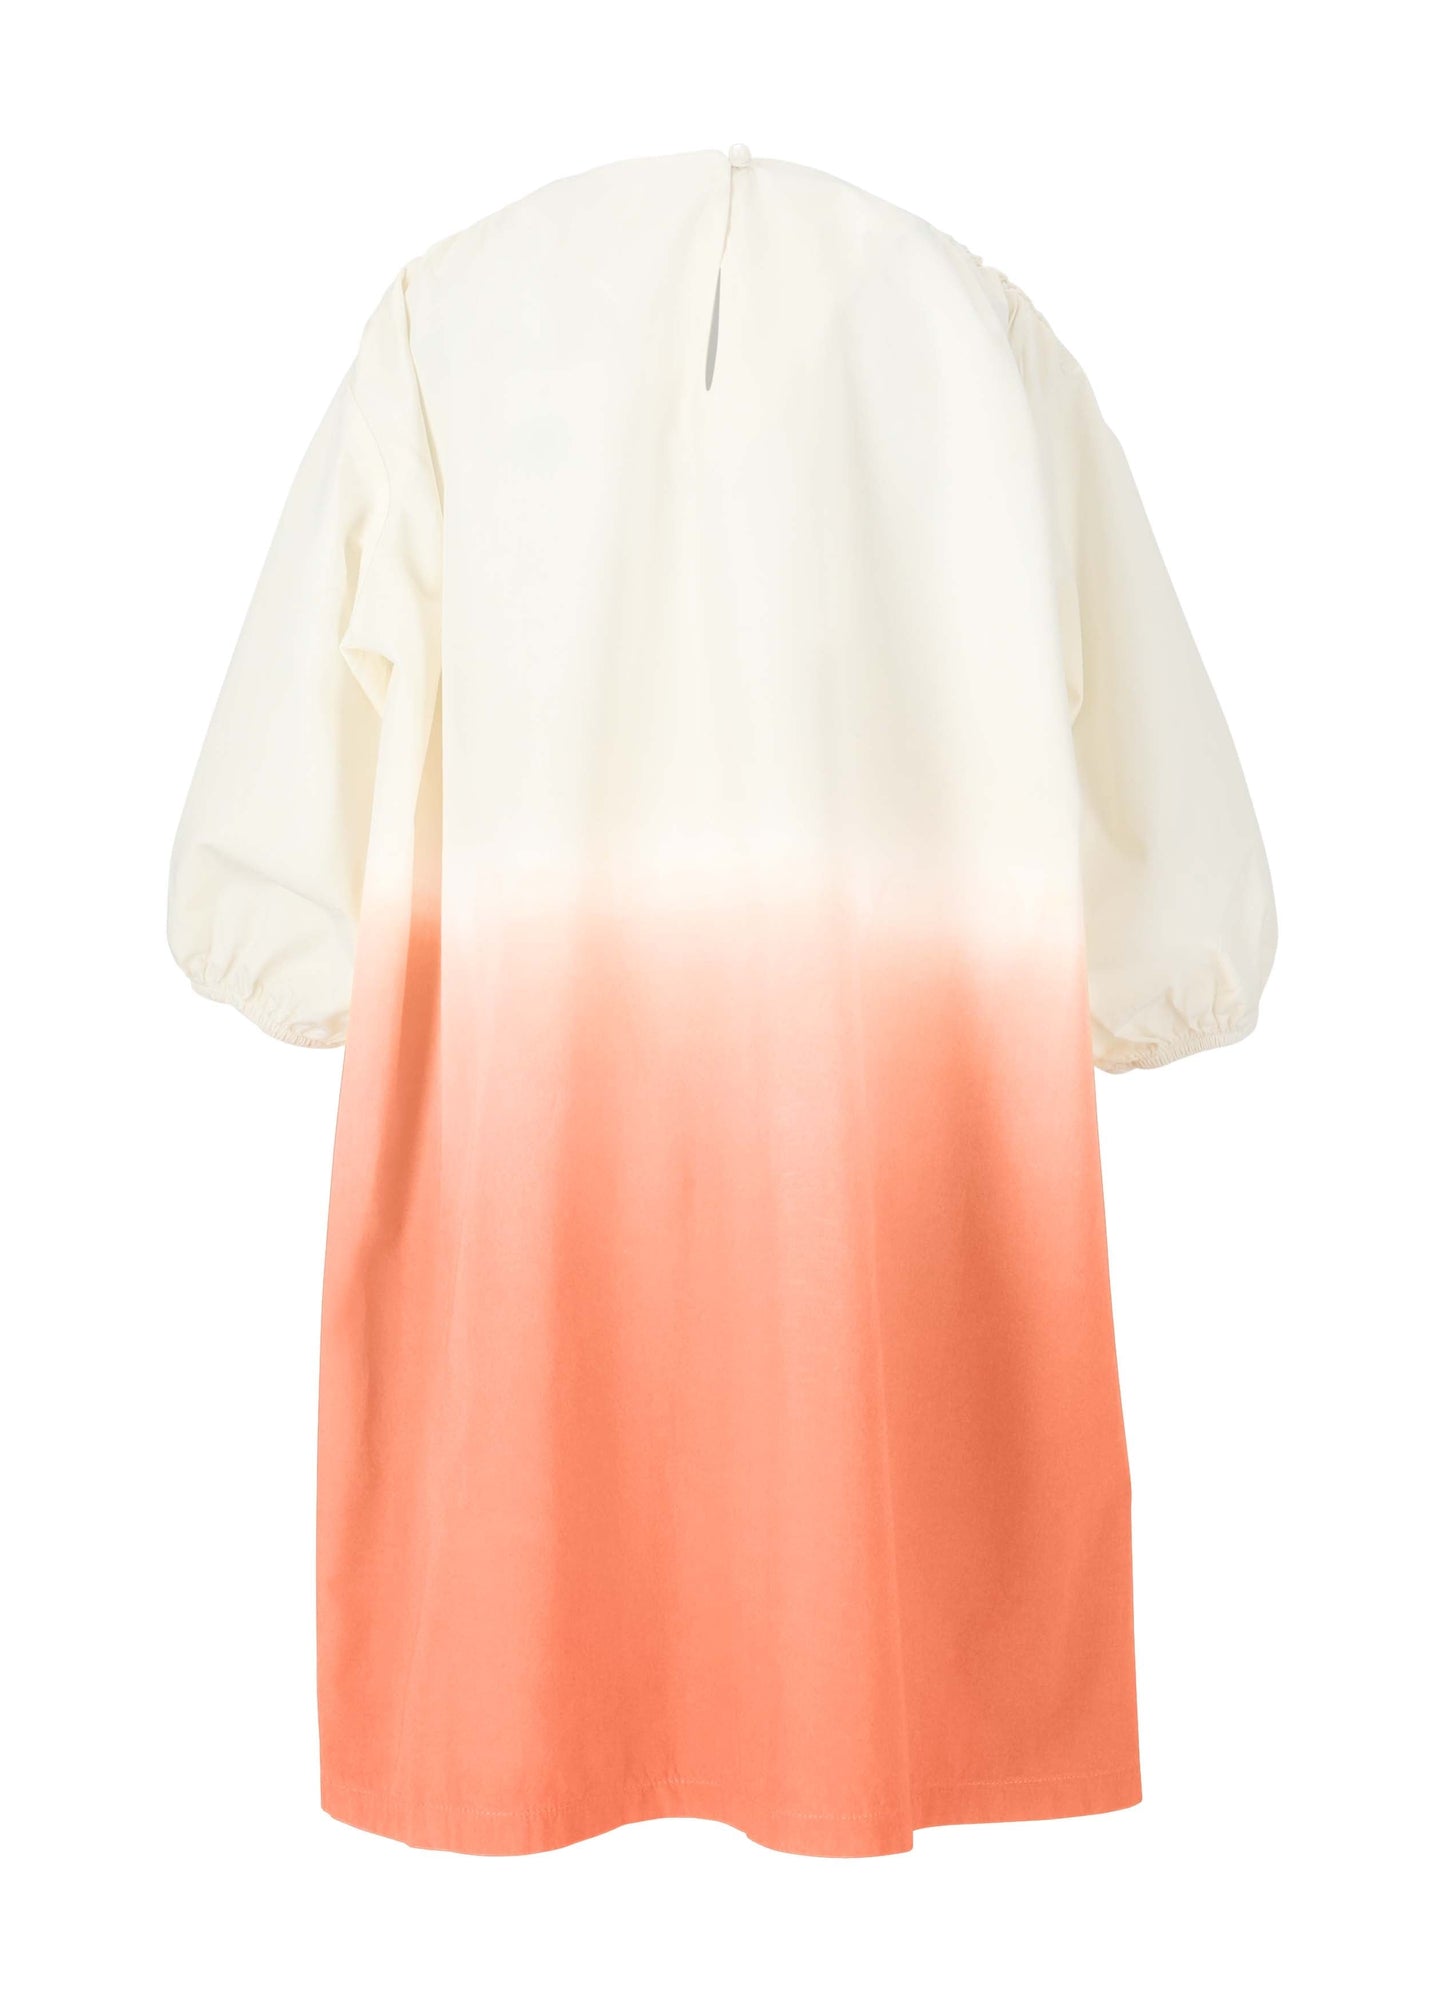 Dress No. 15 - Caramel Dresses LMN3 